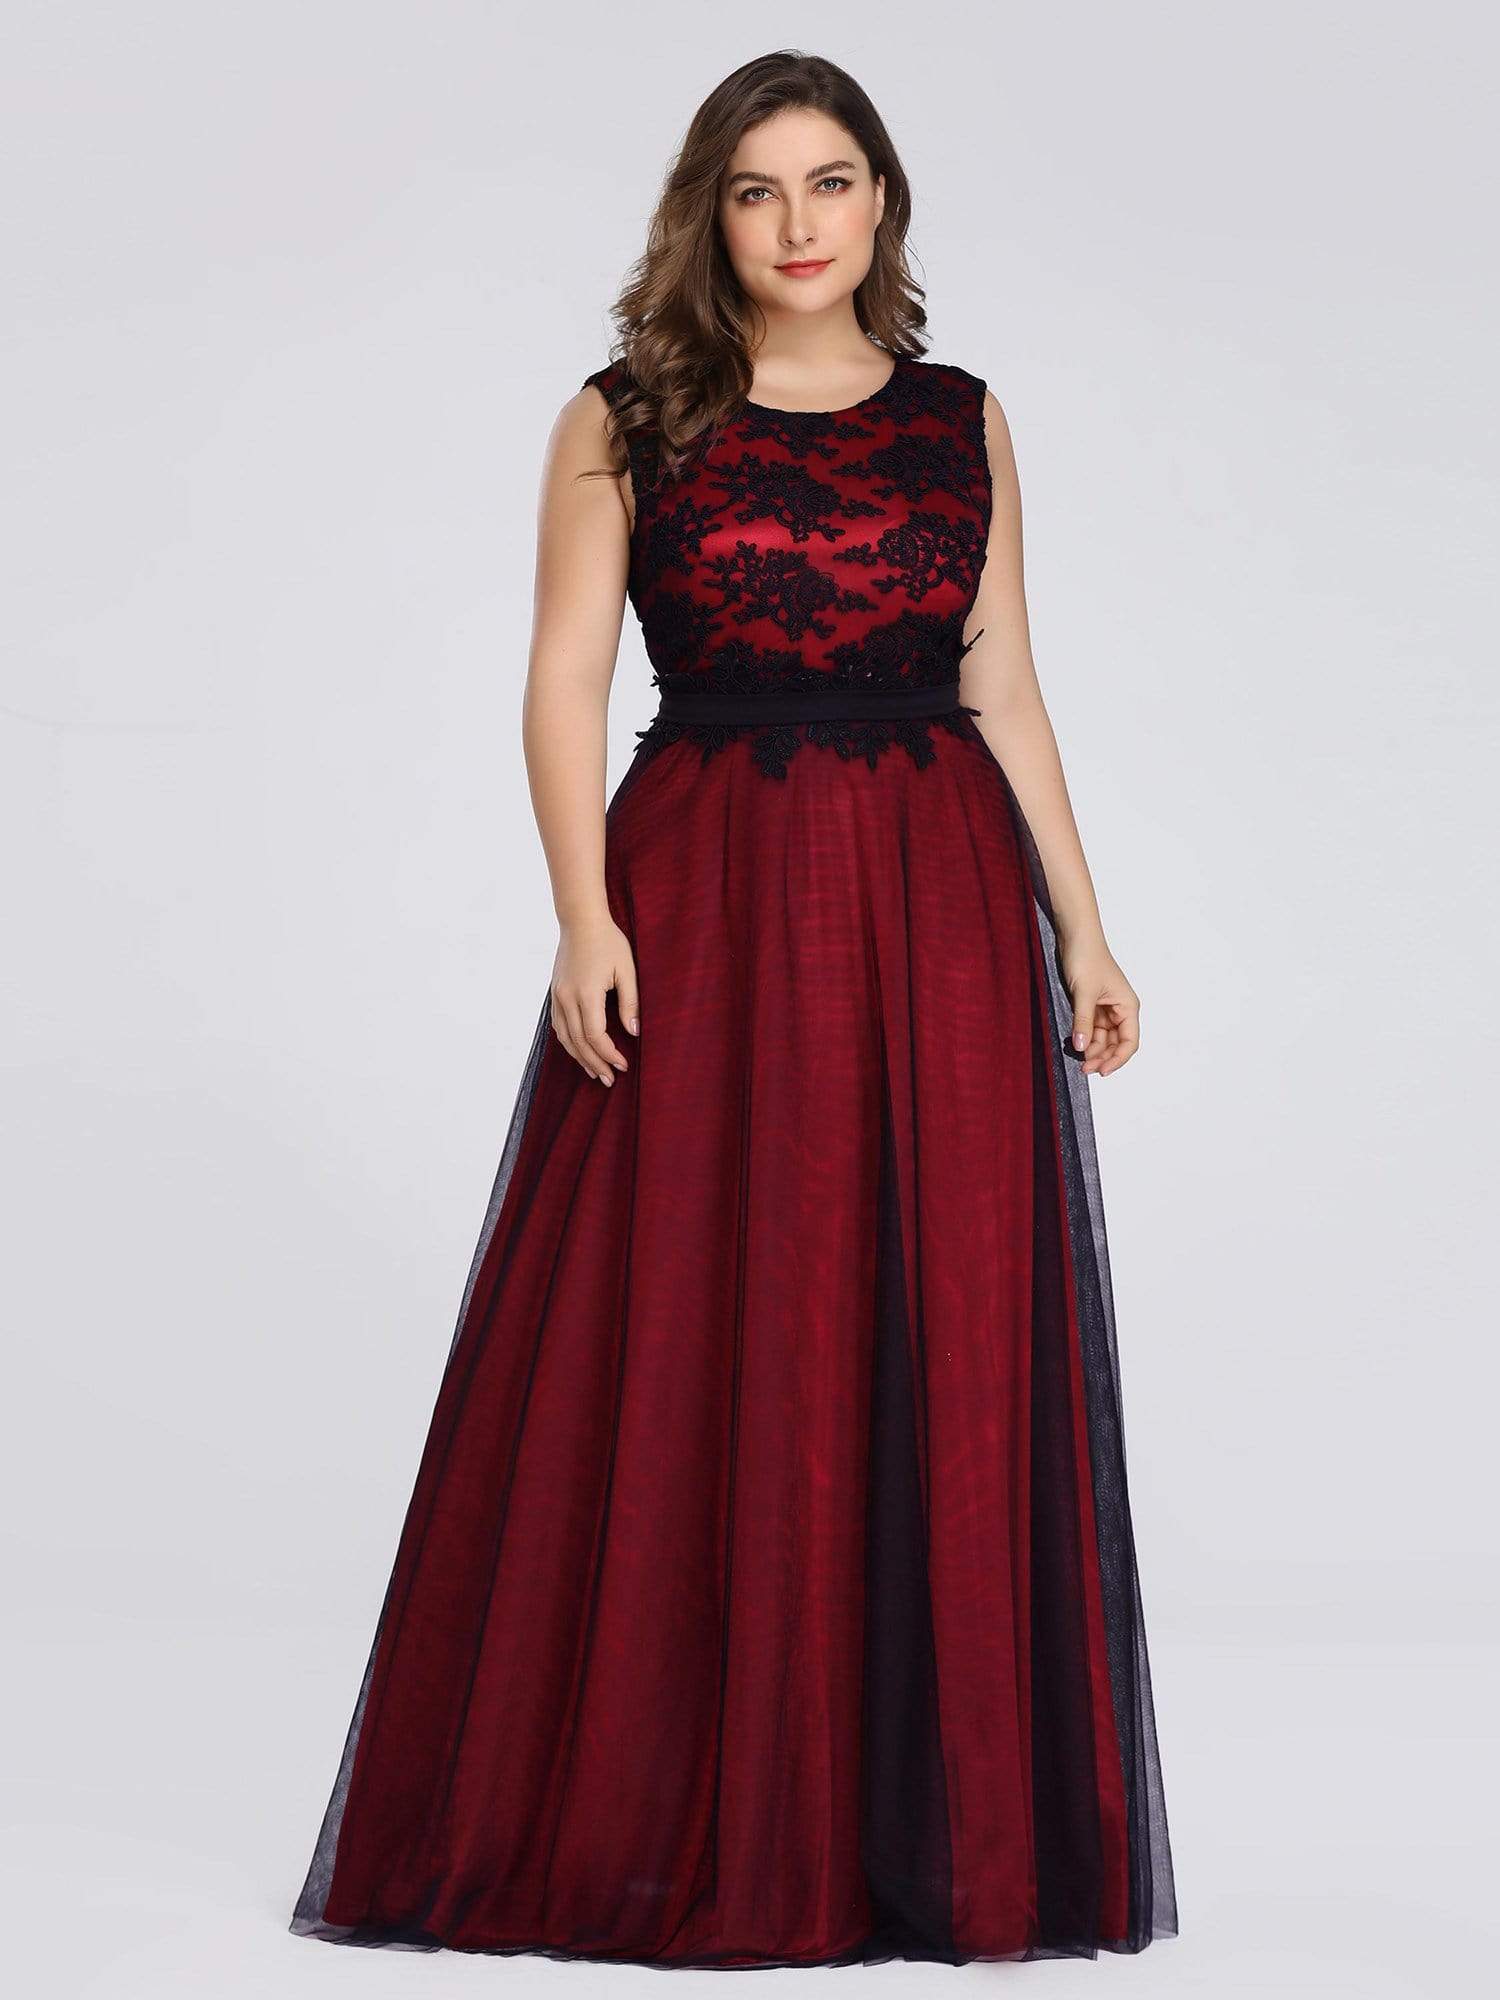 elegant plus size formal dresses